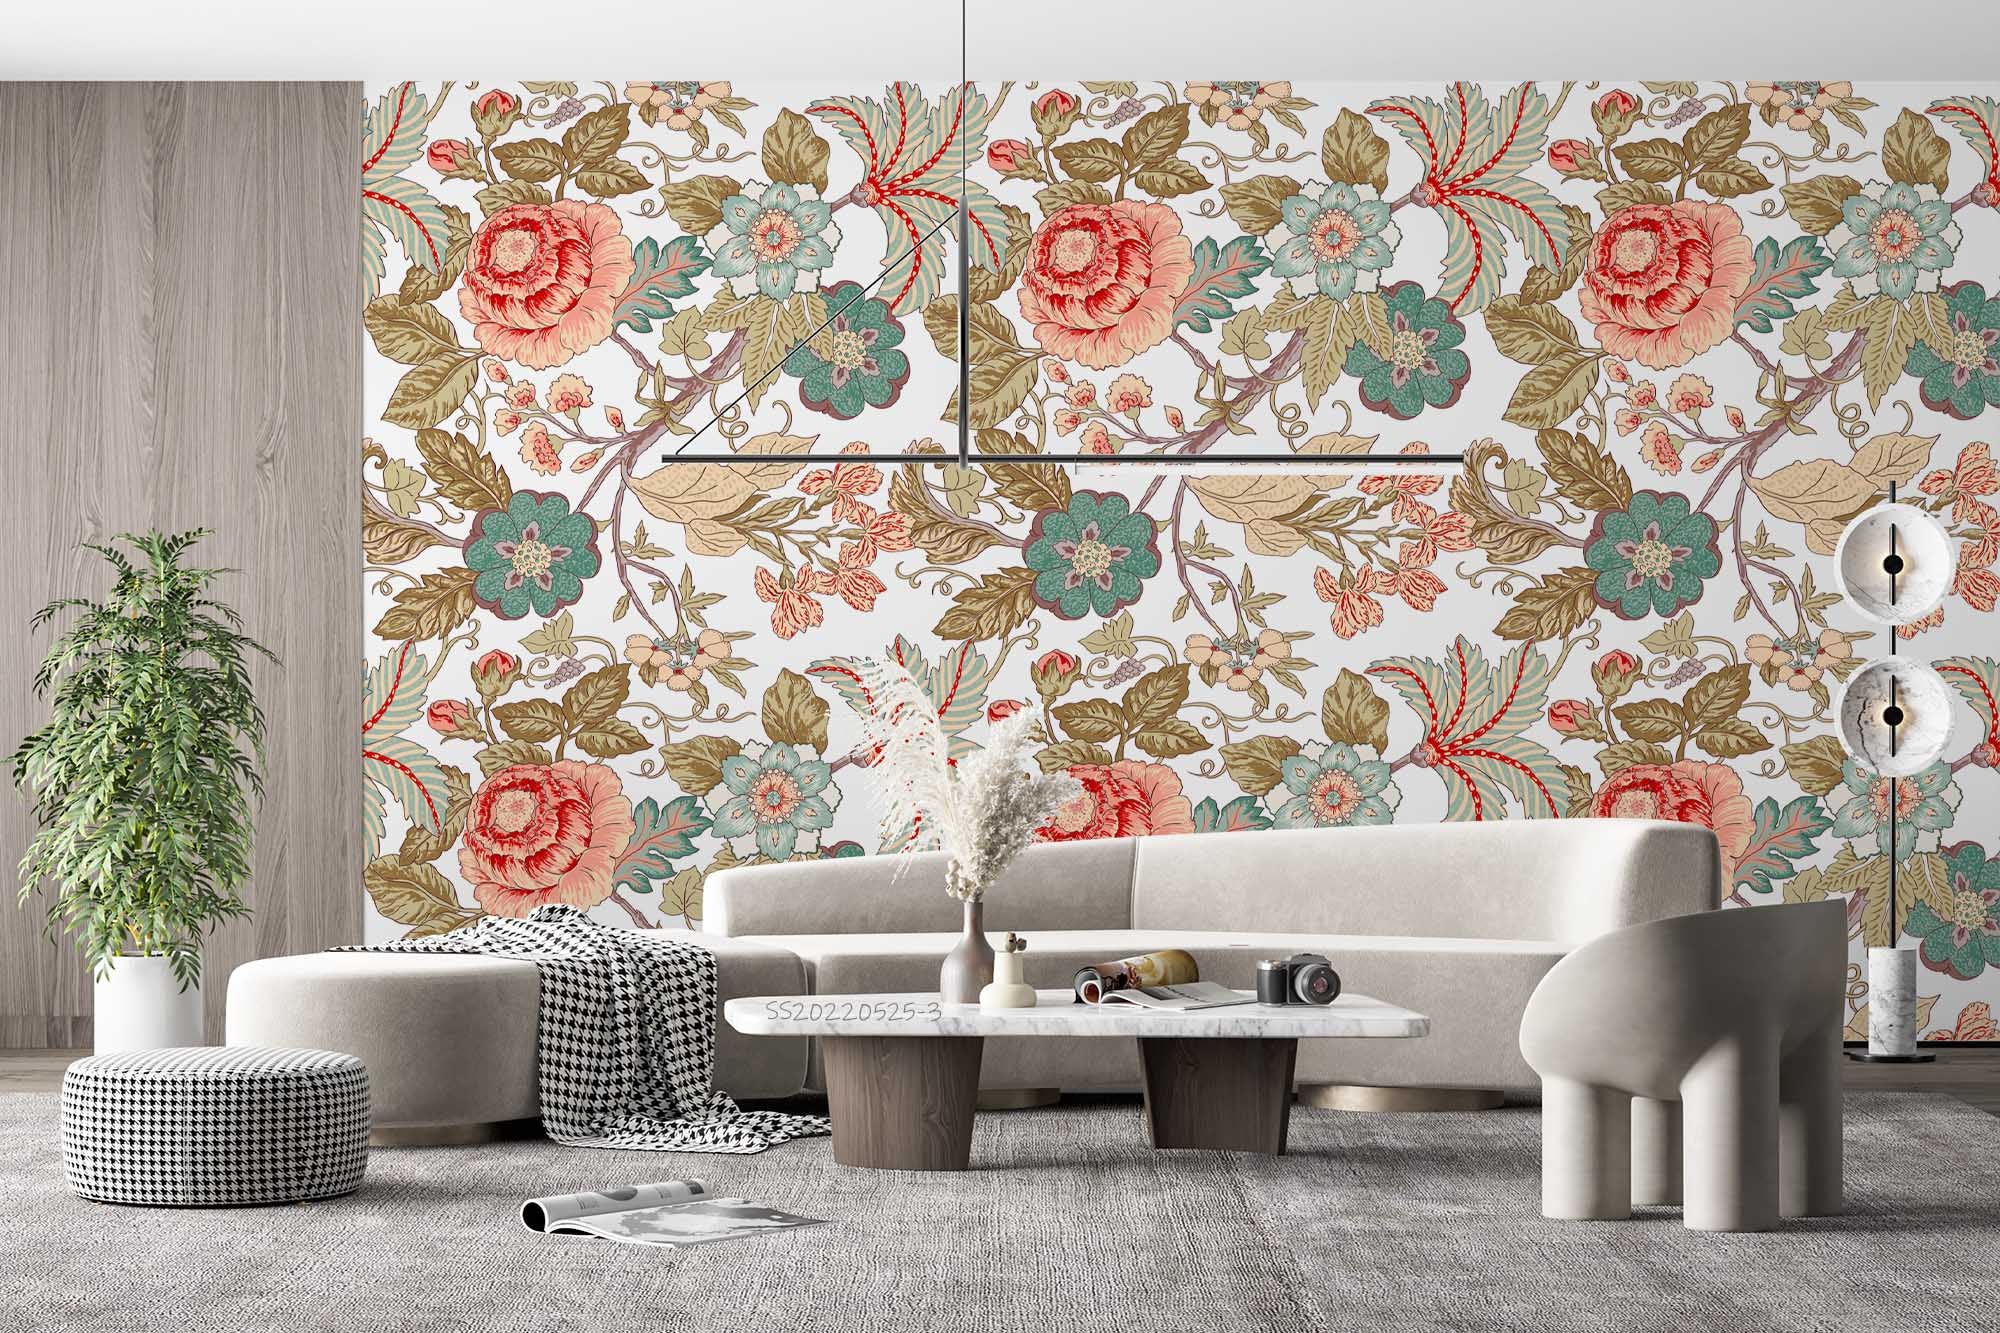 3D Vintage Floral Leaves Background Wall Mural Wallpaper GD 388- Jess Art Decoration